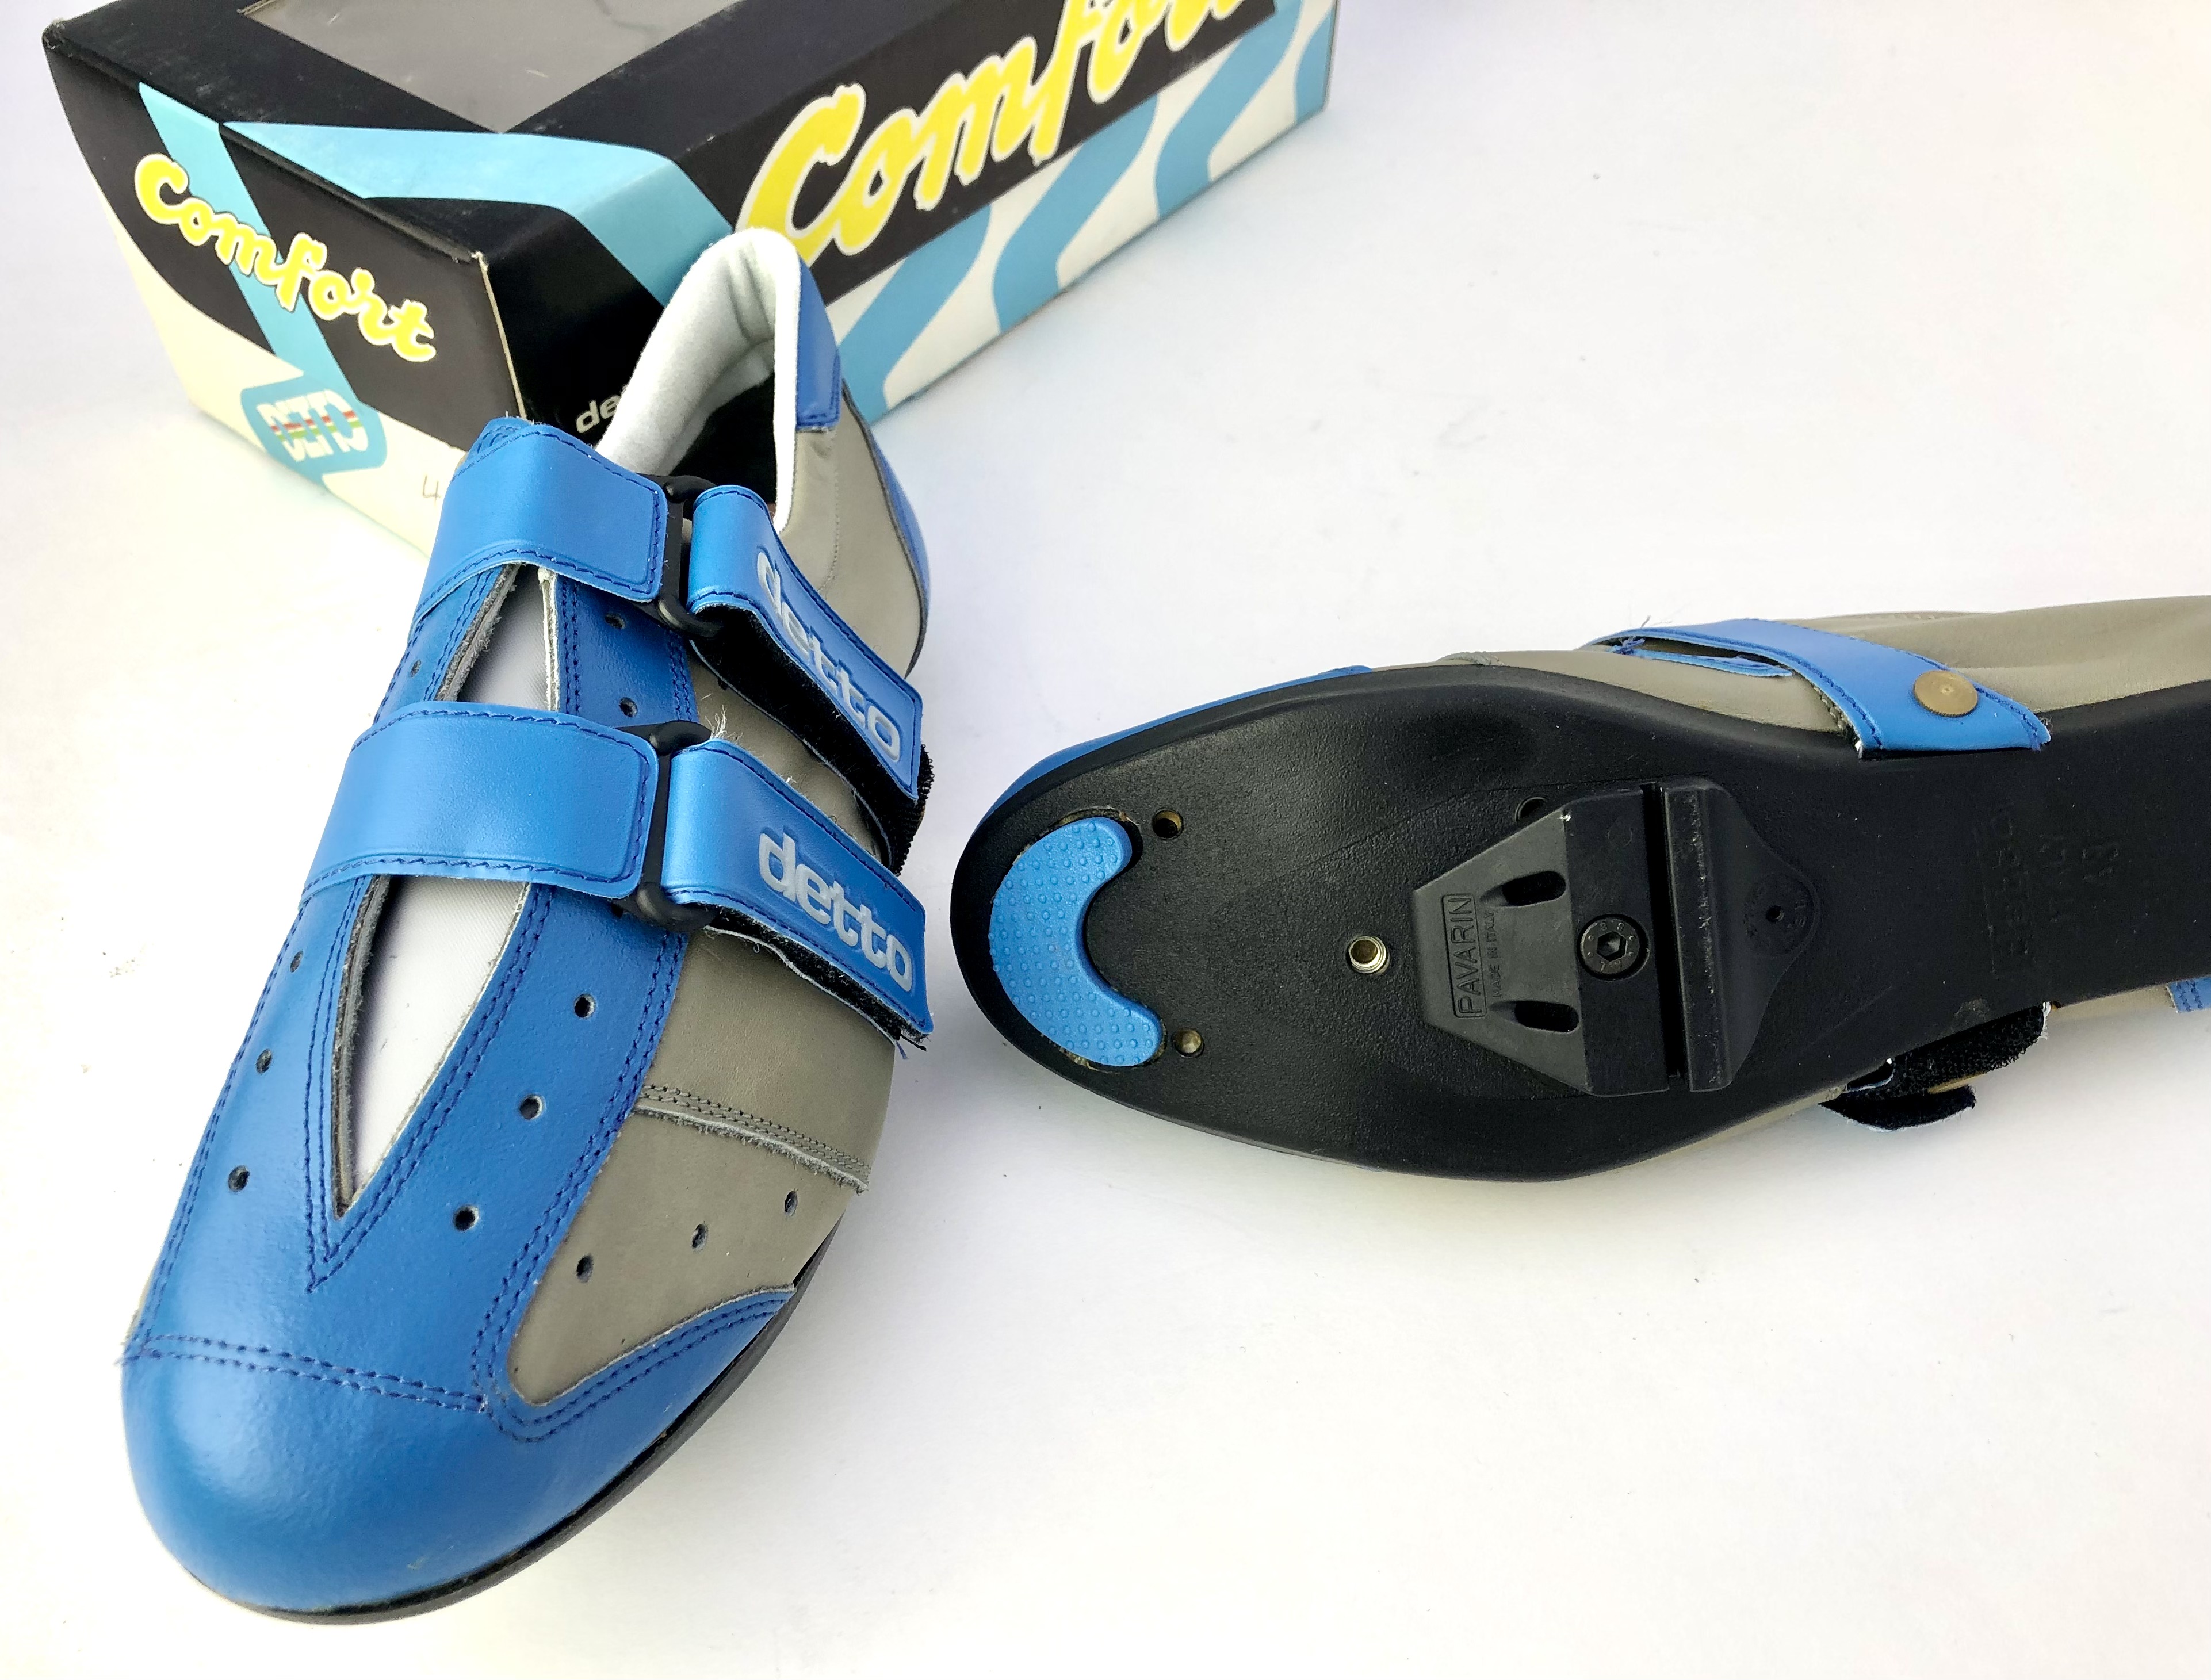 NOS Vintage Detto Pietro Mod. 230 Comfort Blu Cycling Shoes Size 38